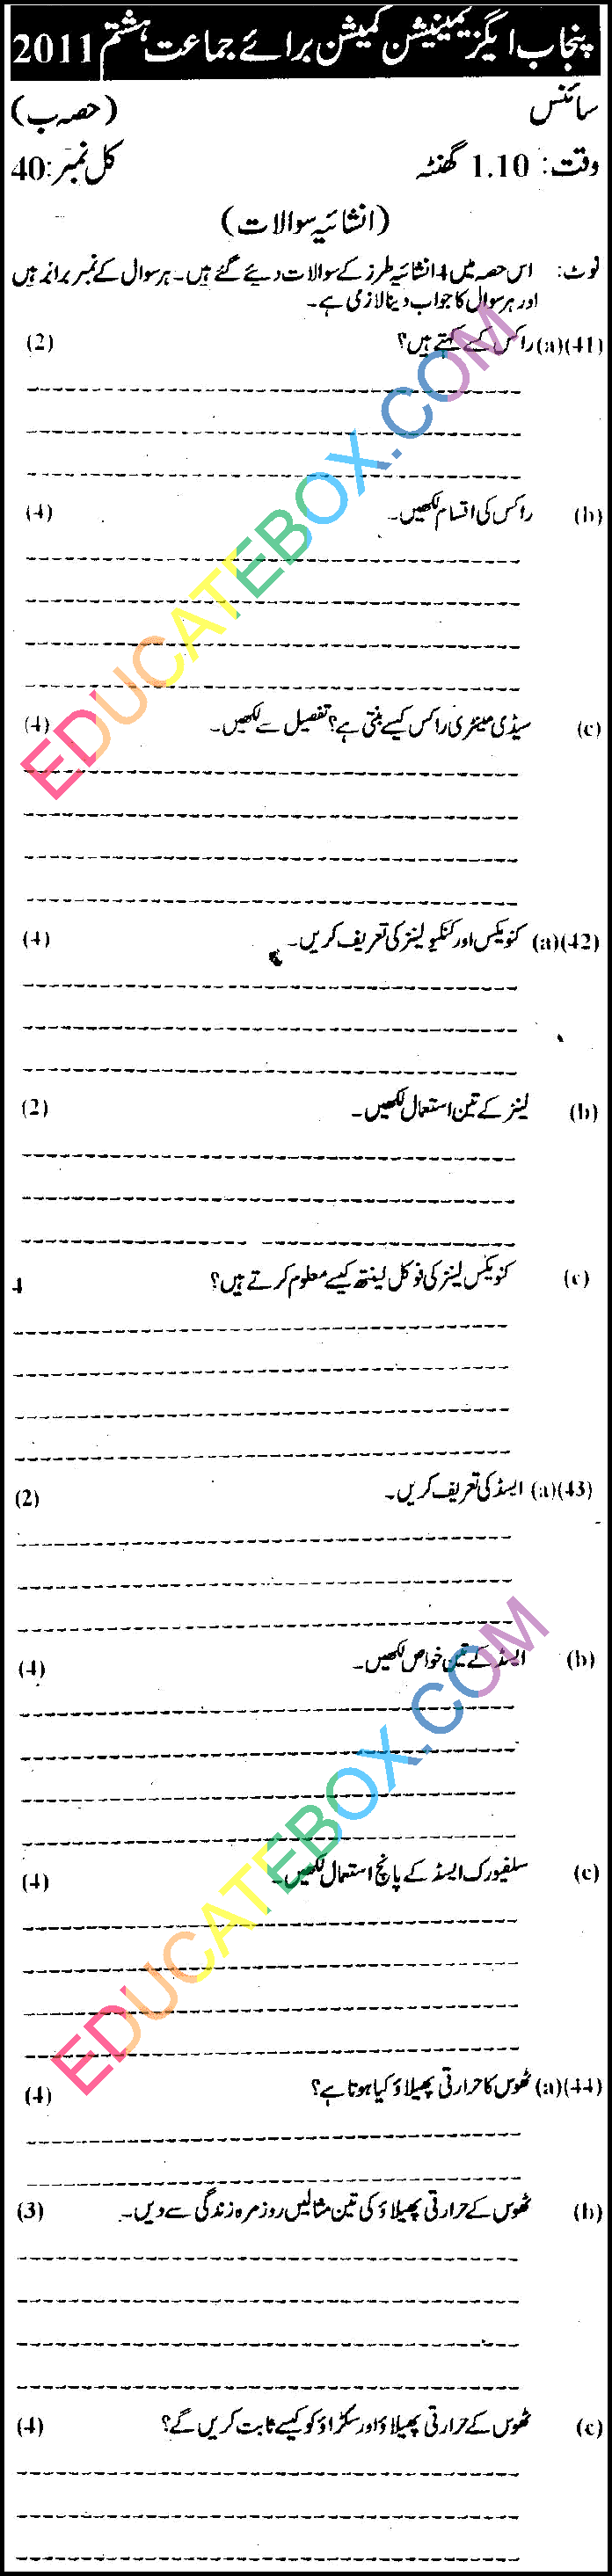 Past Paper 8th Class Science (Urdu Medium) Punjab Board (PEC) 2011 Subjective Type Page 4 - پرچہ سائنس 2011 جماعت ہشتم پنجاب بورڈ اردو میڈیم انشائیہ طرز